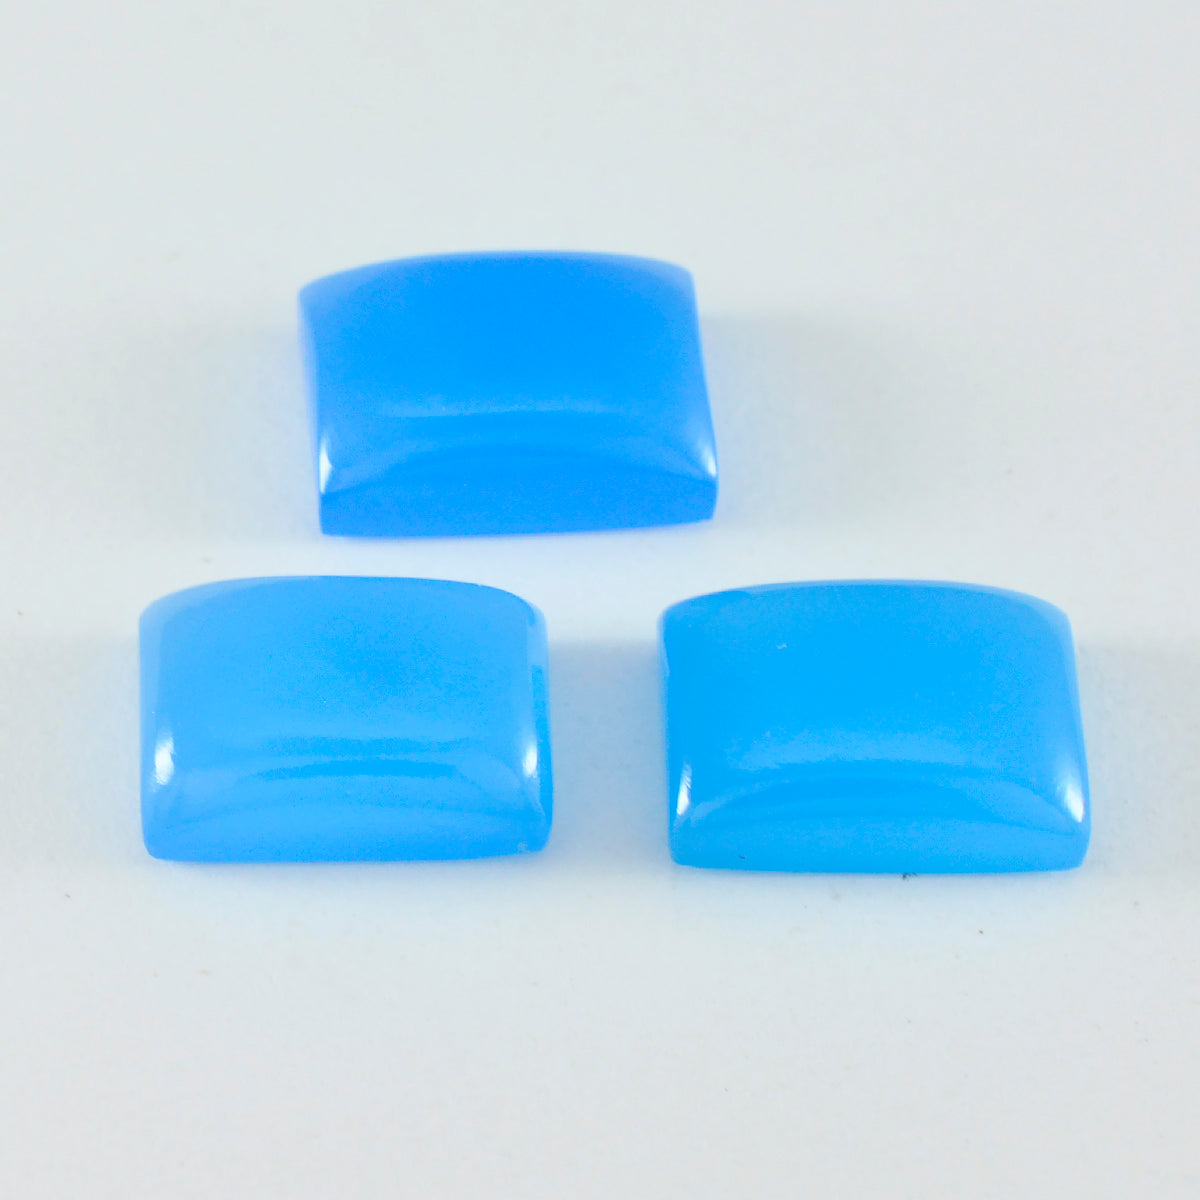 riyogems 1 st blå kalcedon cabochon 10x14 mm oktagonform snygg kvalitetssten